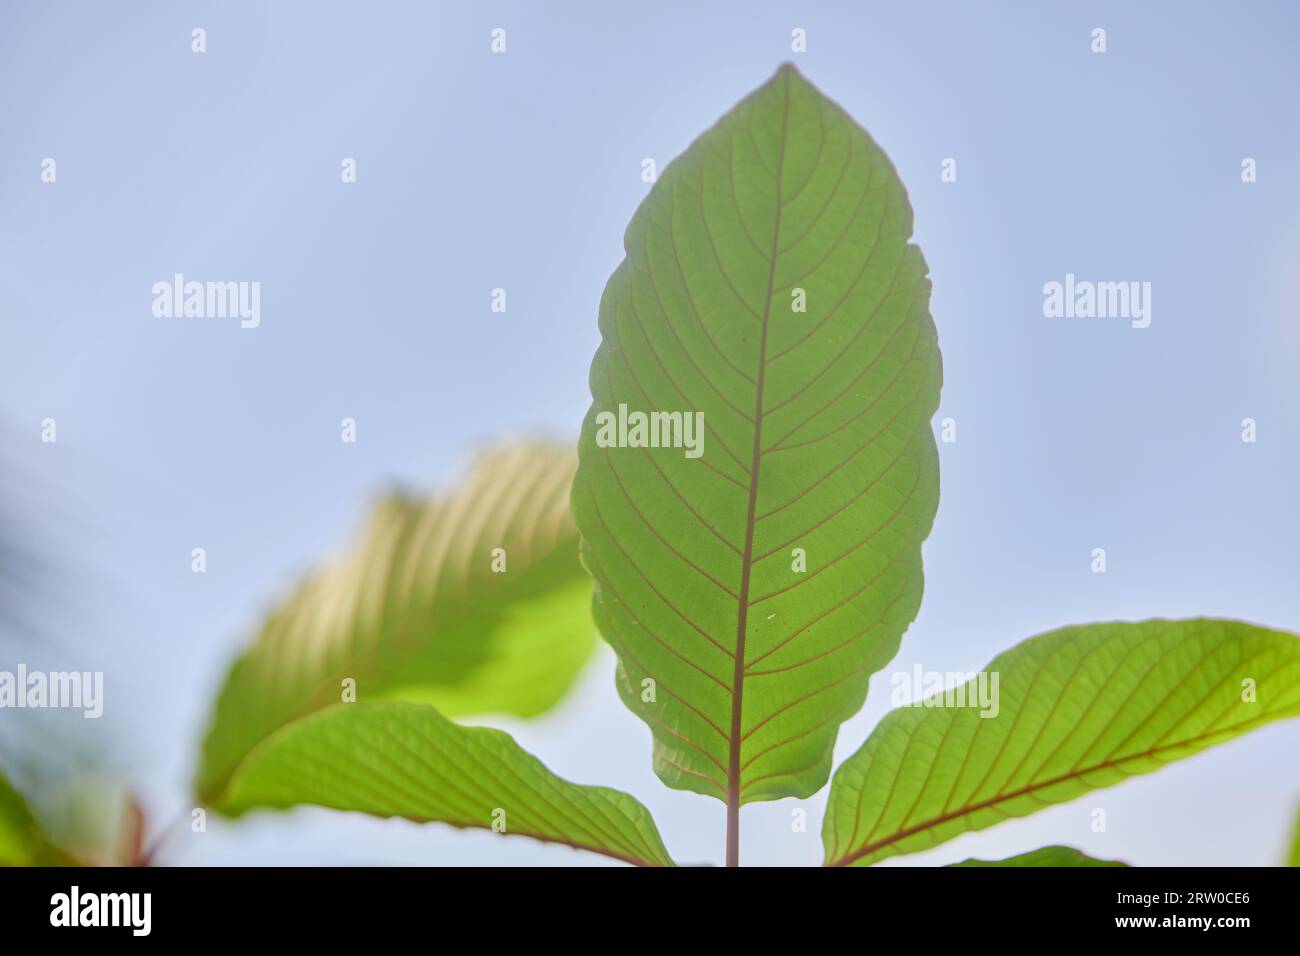 Close-up view of mitragyna speciosa or Kratom leaf Stock Photo